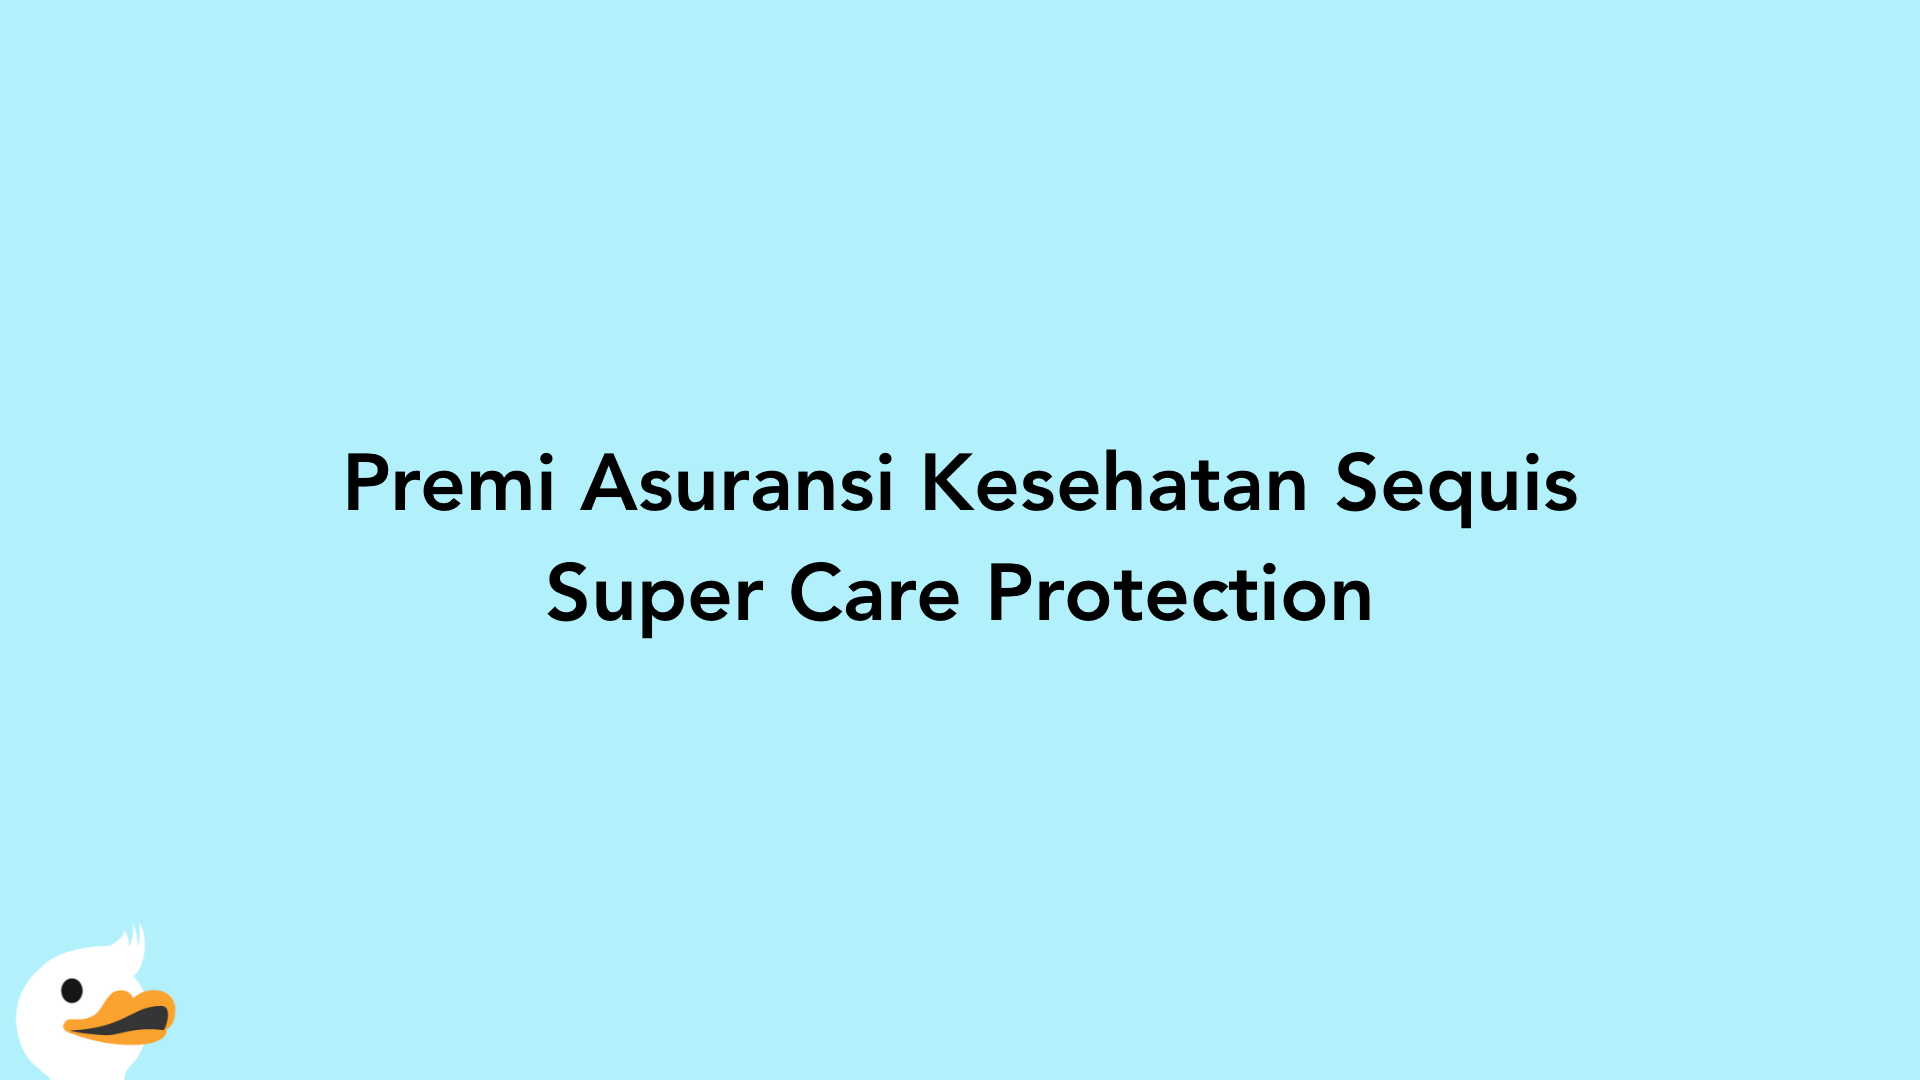 Premi Asuransi Kesehatan Sequis Super Care Protection